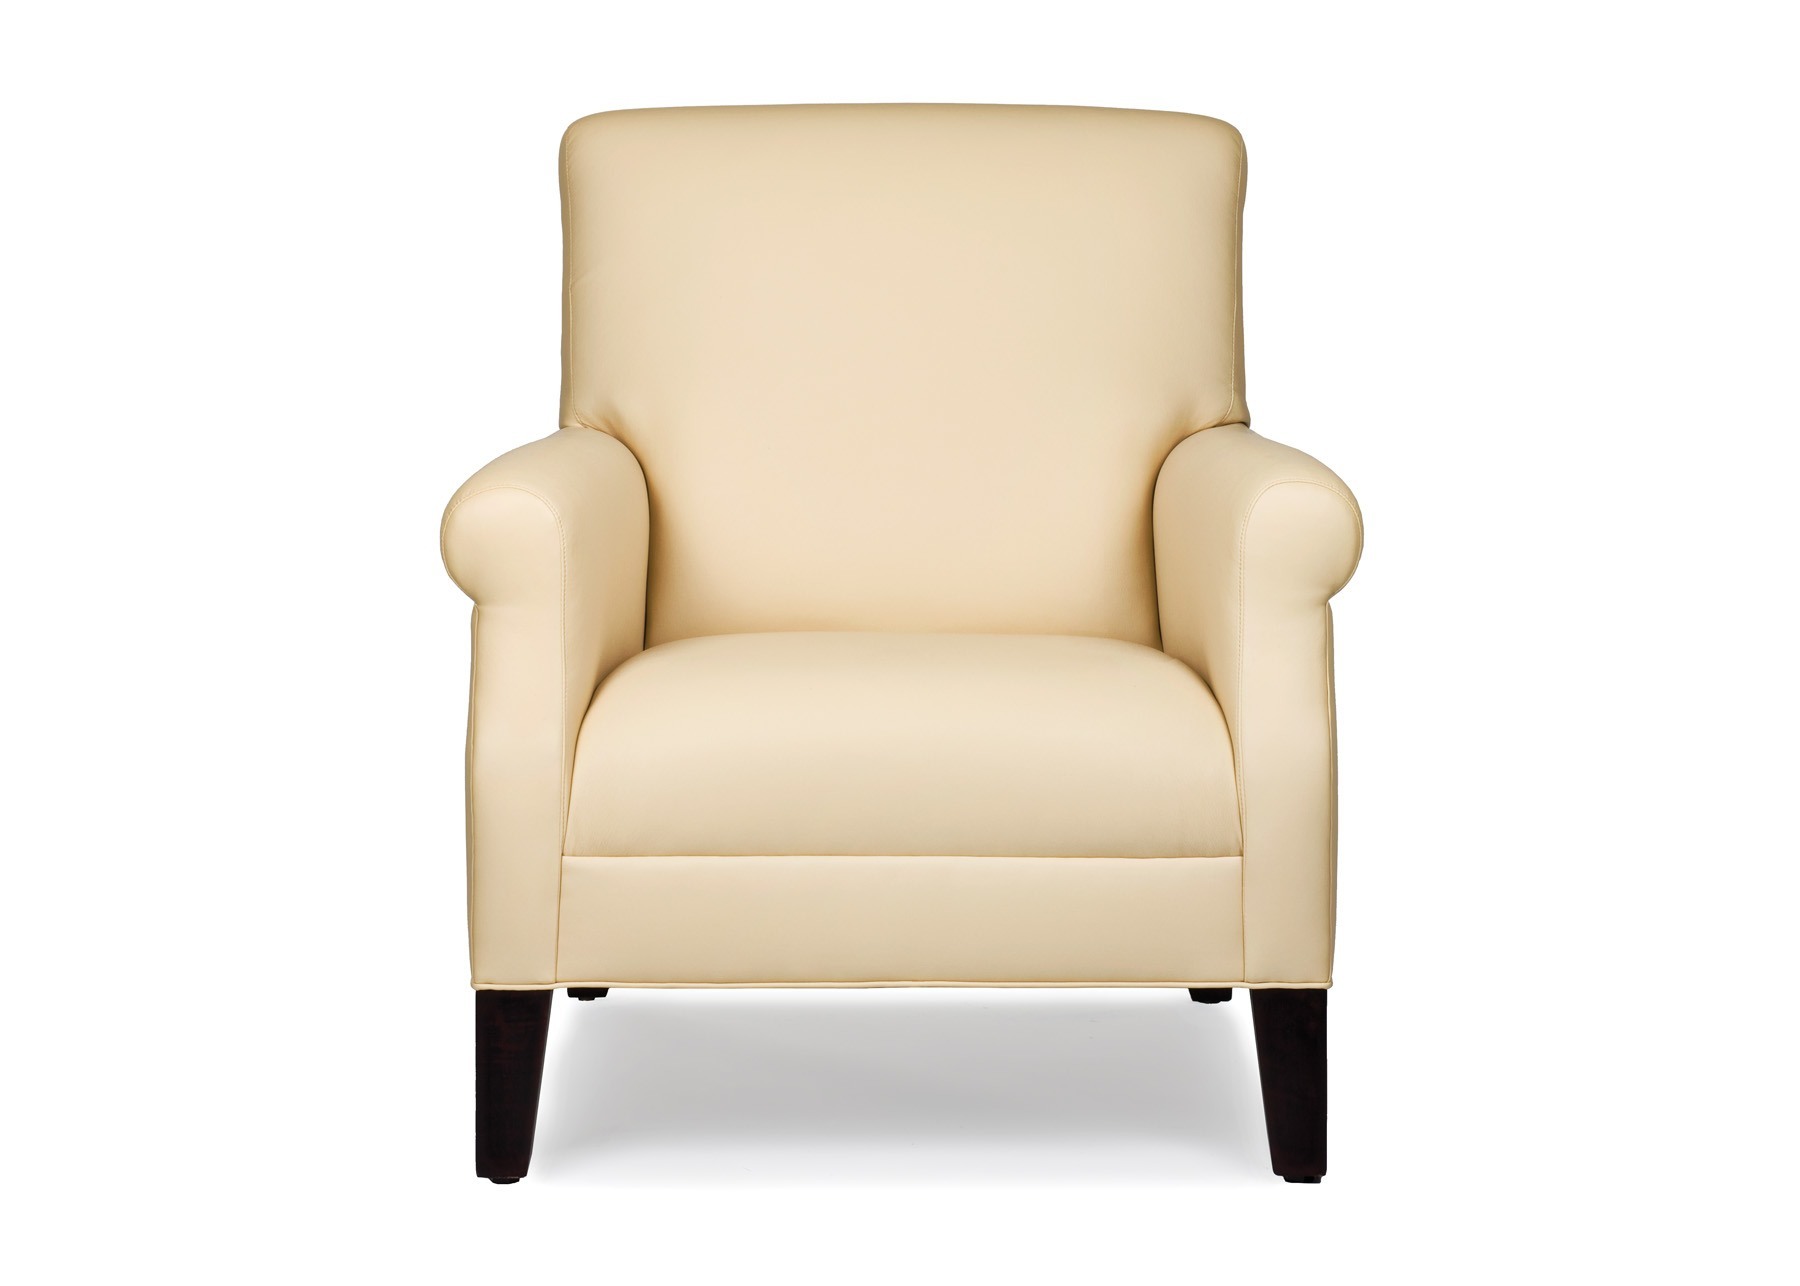 Cabot Wrenn Charleston Lounge Chair